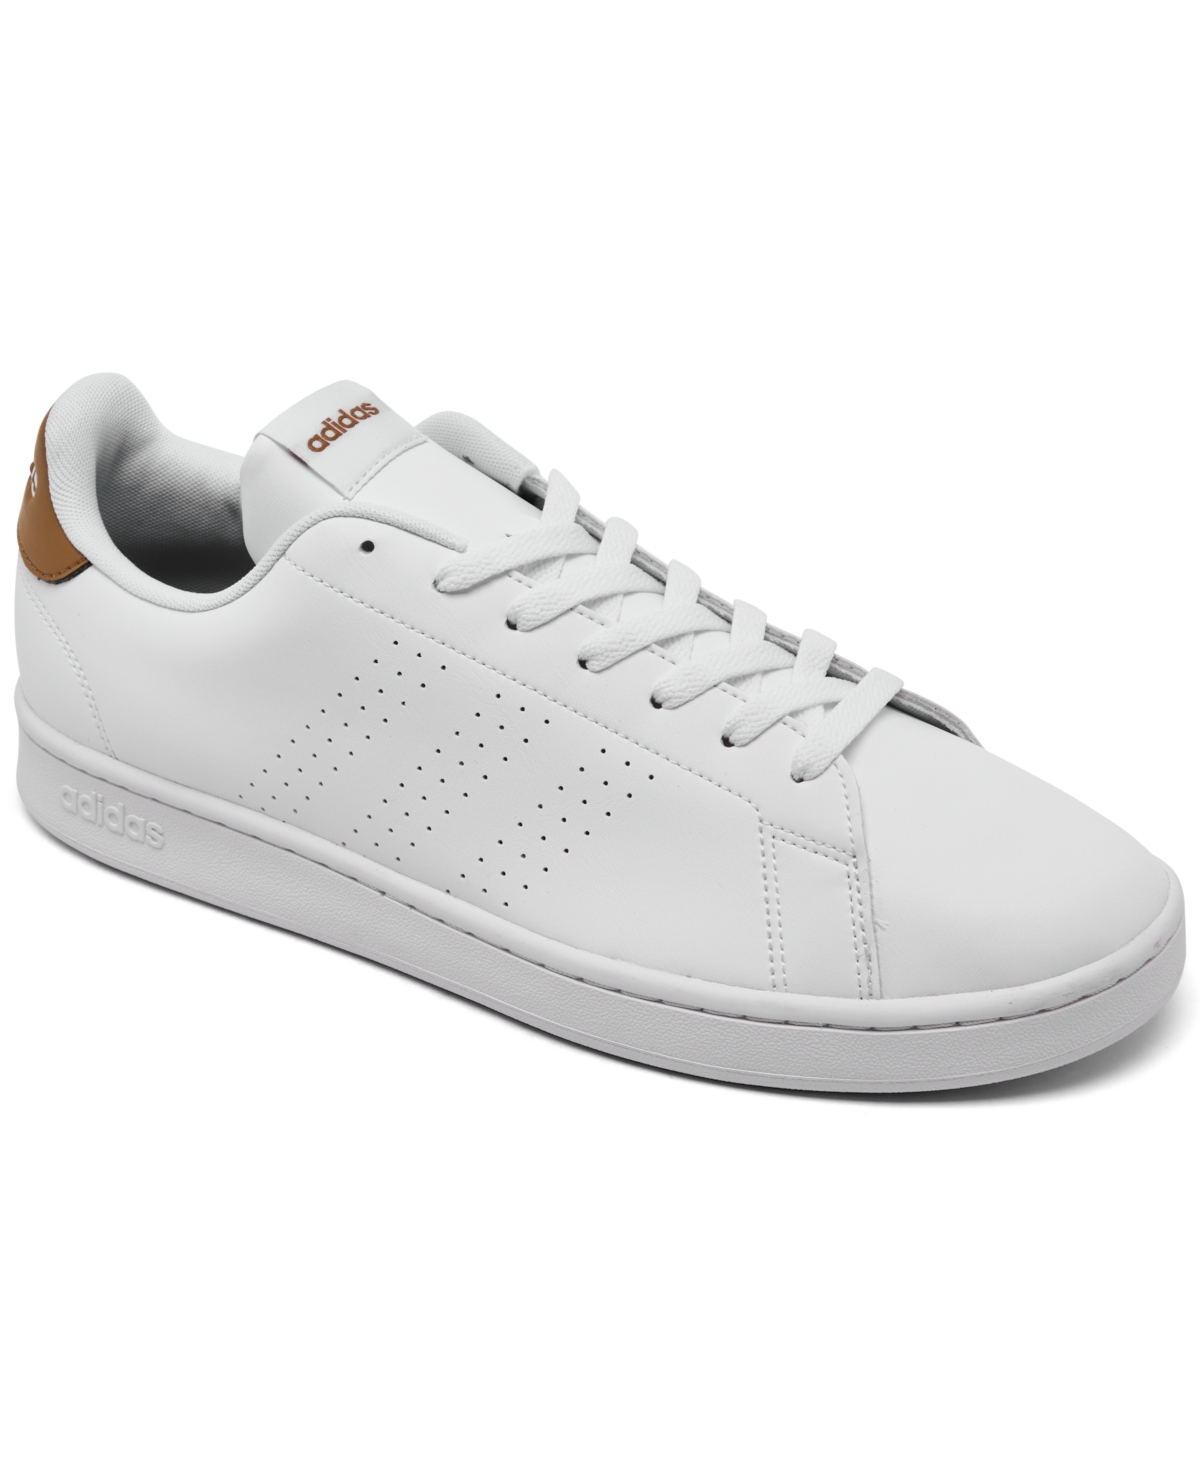 Adidas Originals Men's Essentials Advantage Casual Sneakers From Finish Line In White